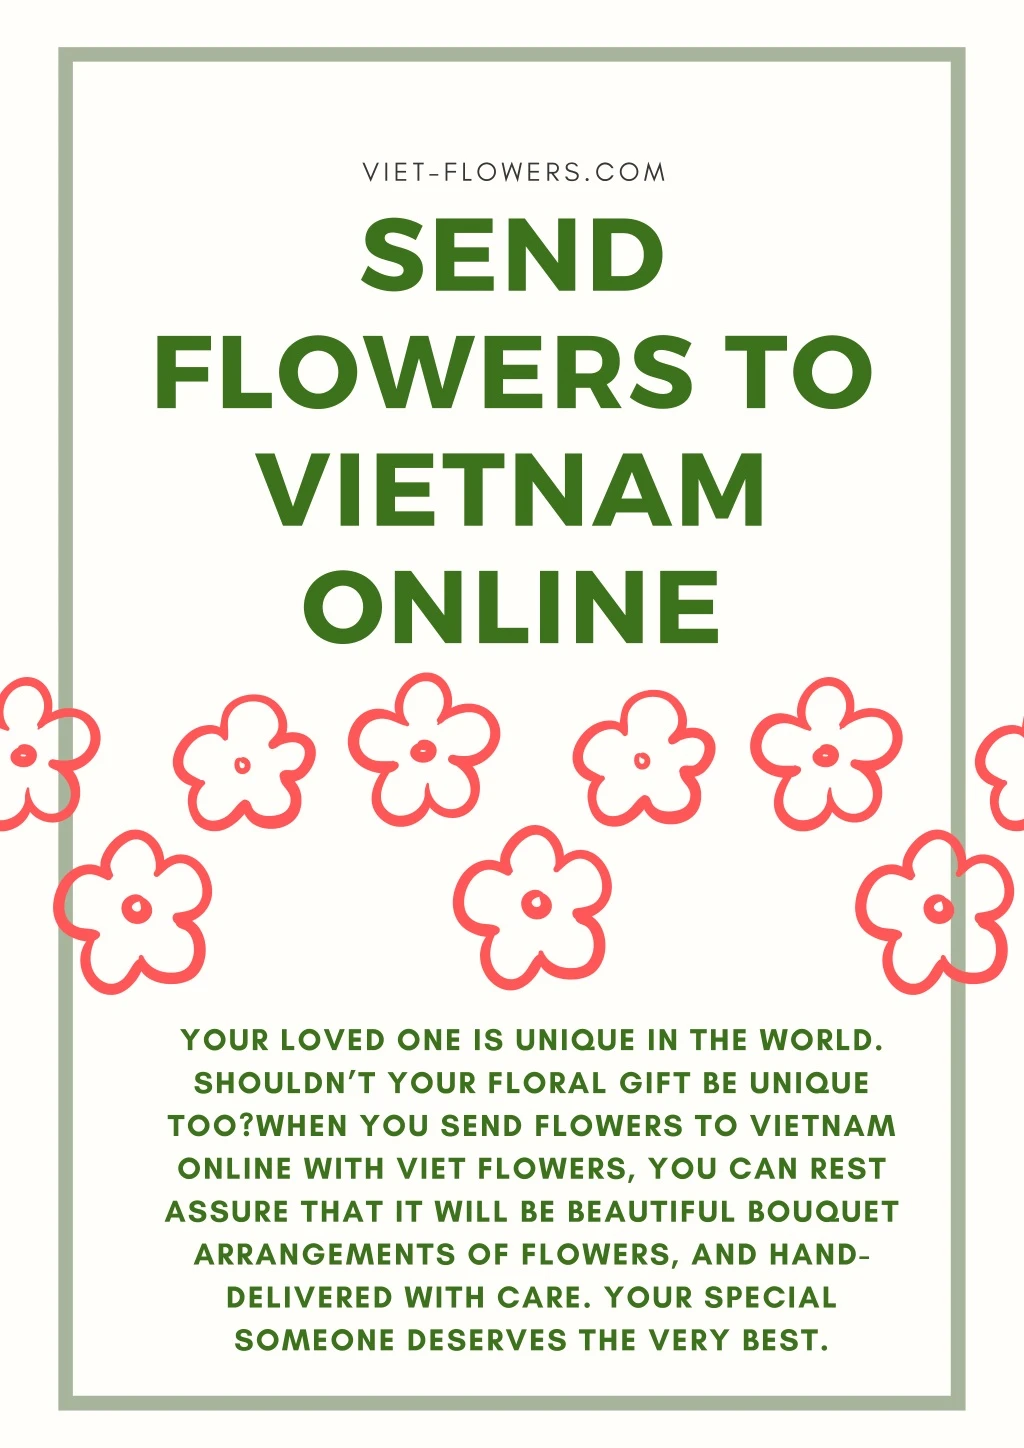 viet flowers com send